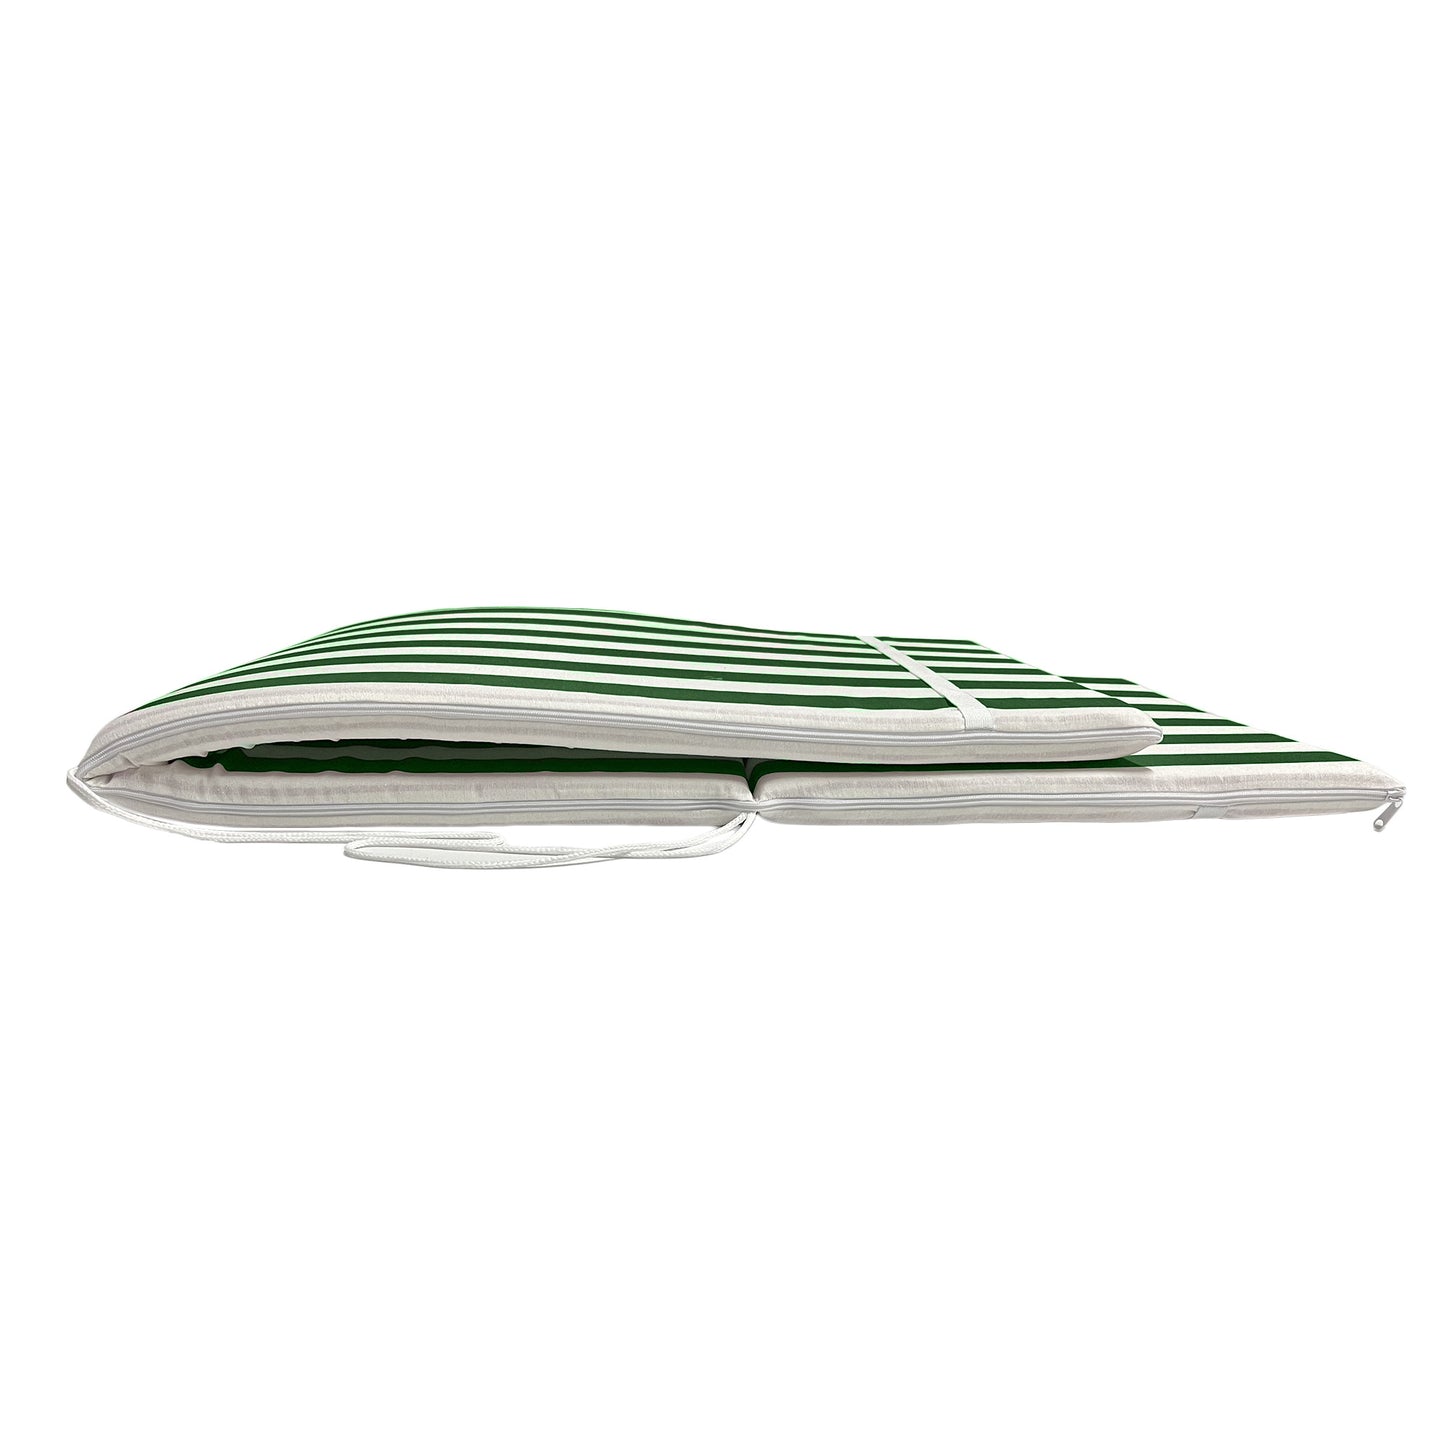 Cuscino fasciato Verde per Sdraio mare 165x50 cm - Prolunga